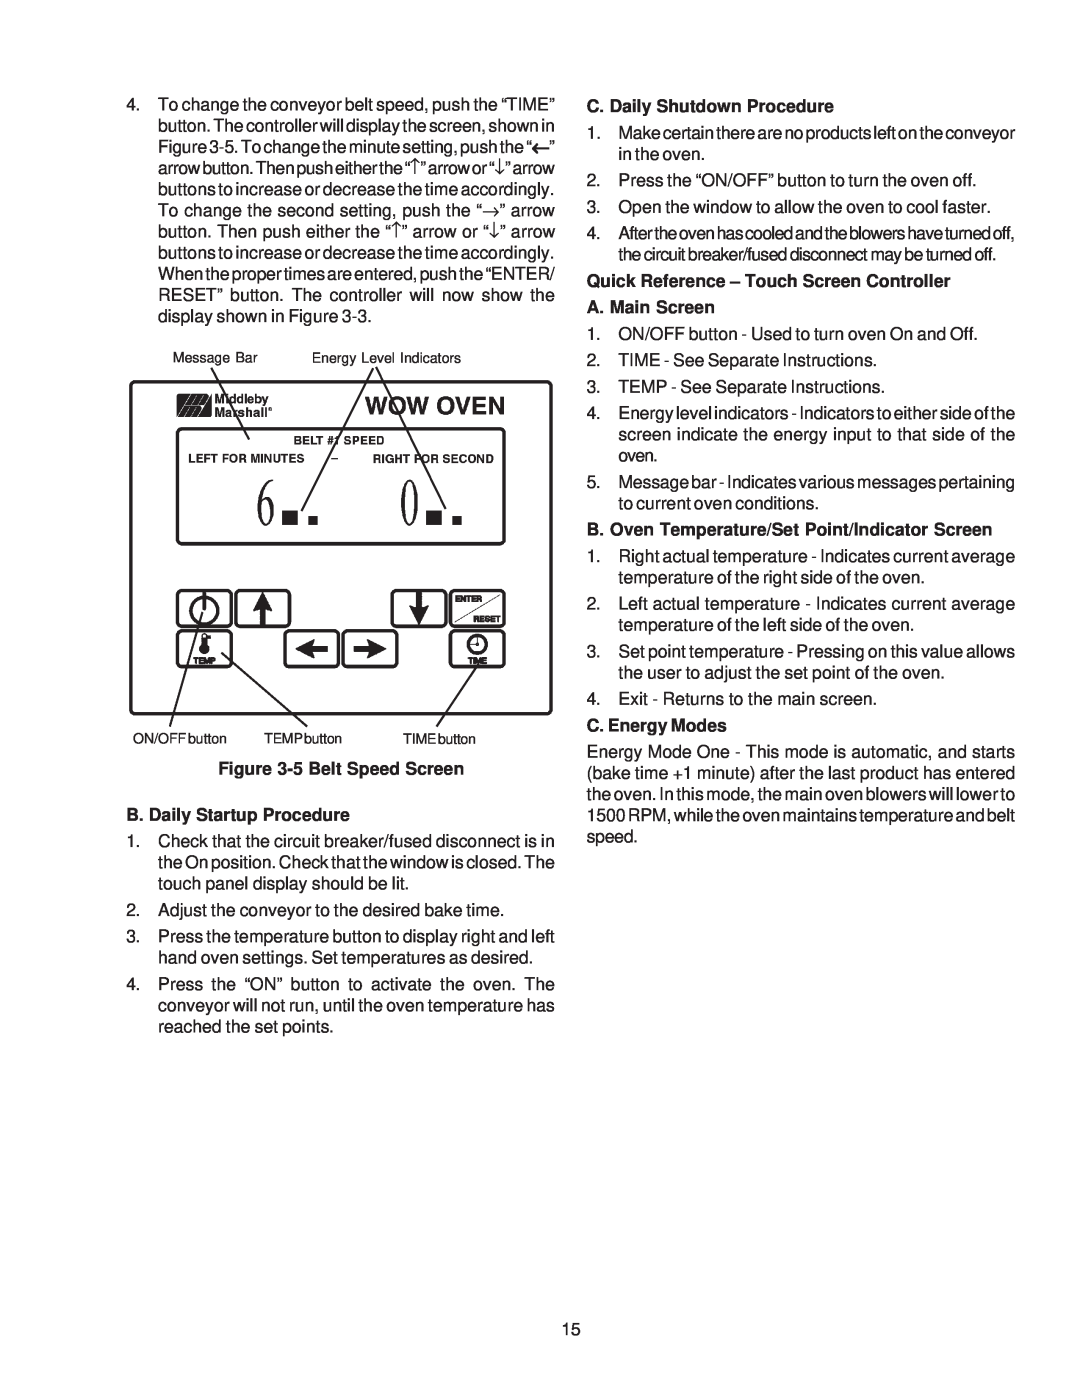 Middleby Marshall PS670 5Belt Speed Screen, B. Daily Startup Procedure, C. Daily Shutdown Procedure, C. Energy Modes 